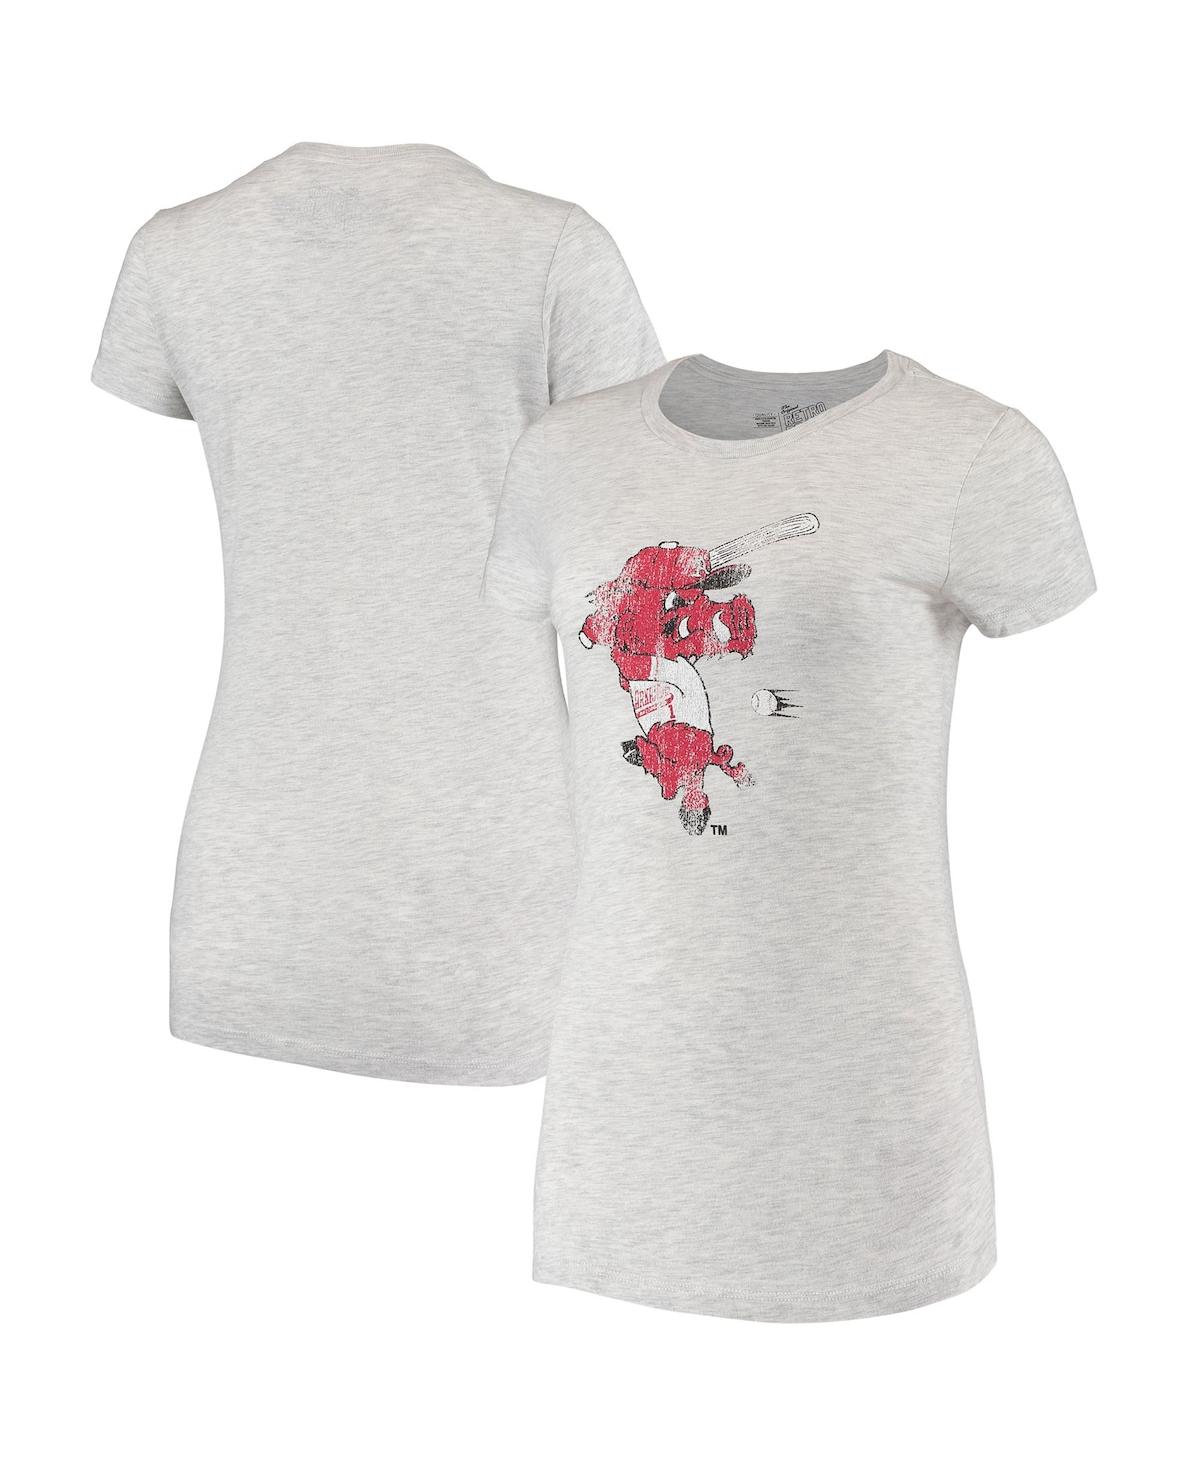 Women's Original Retro Brand Gray Arkansas Razorbacks Tri-Blend T-shirt - Gray